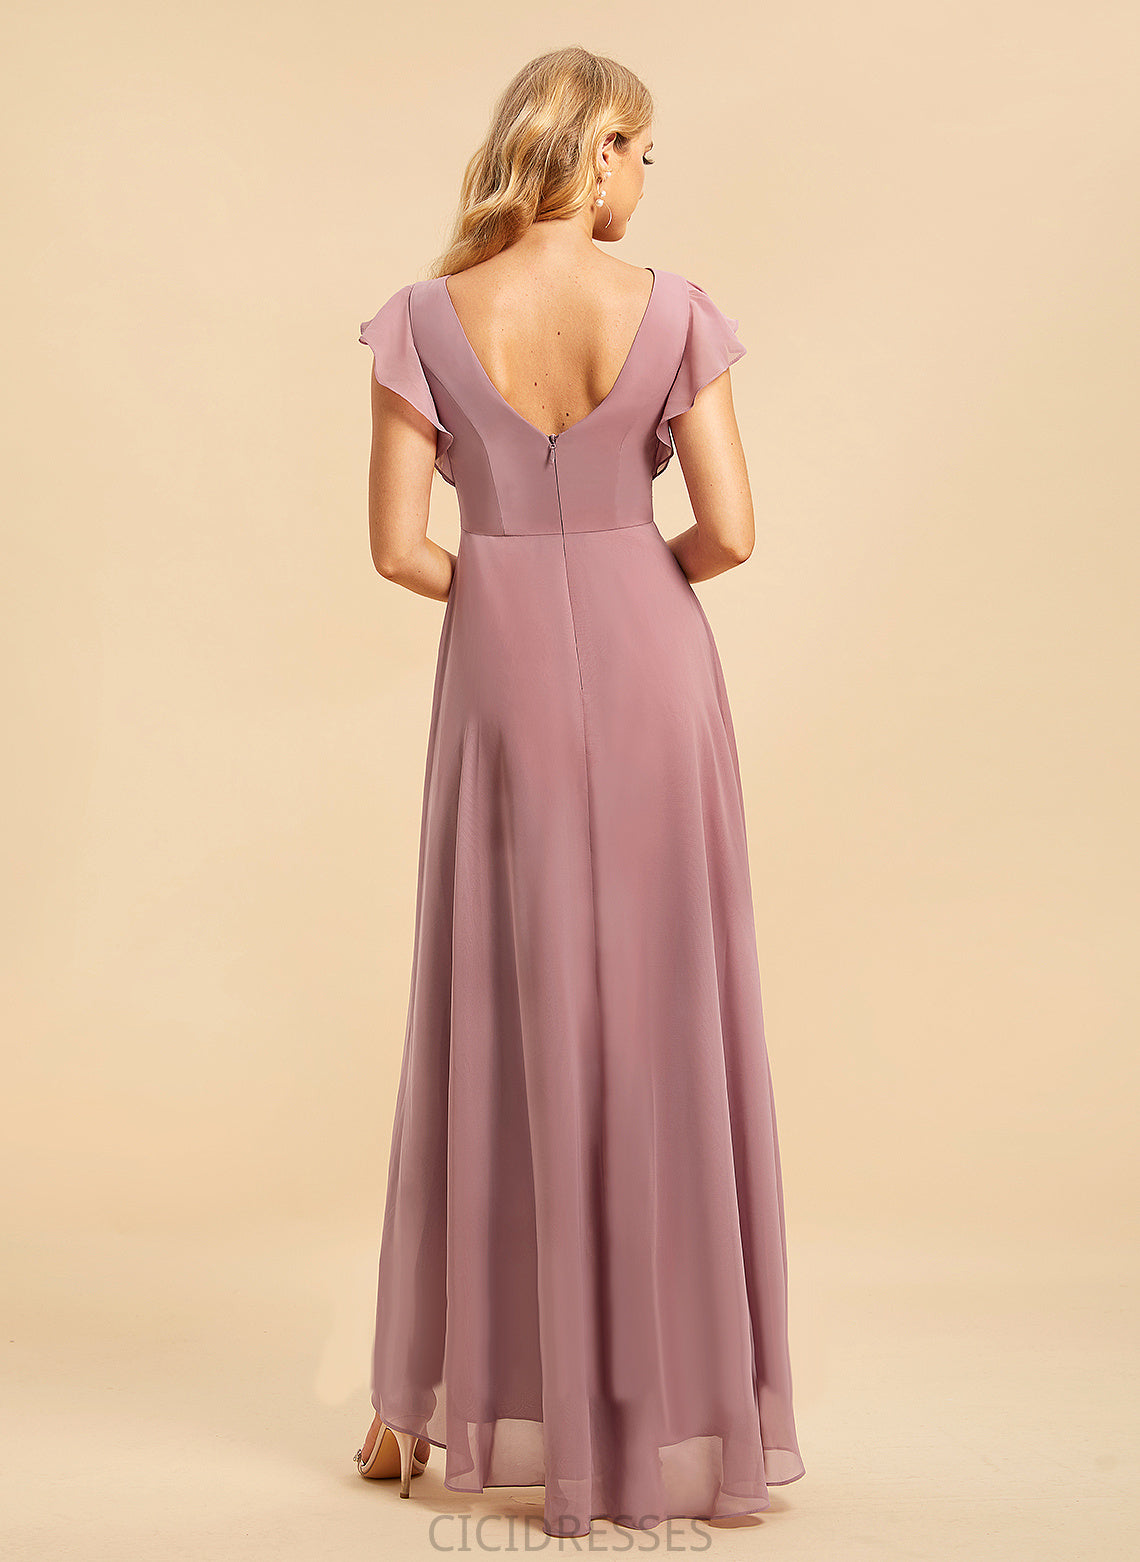 Asymmetrical Fabric A-Line Neckline Embellishment Silhouette Ruffle Length ScoopNeck Salma Scoop Cap Sleeves Bridesmaid Dresses